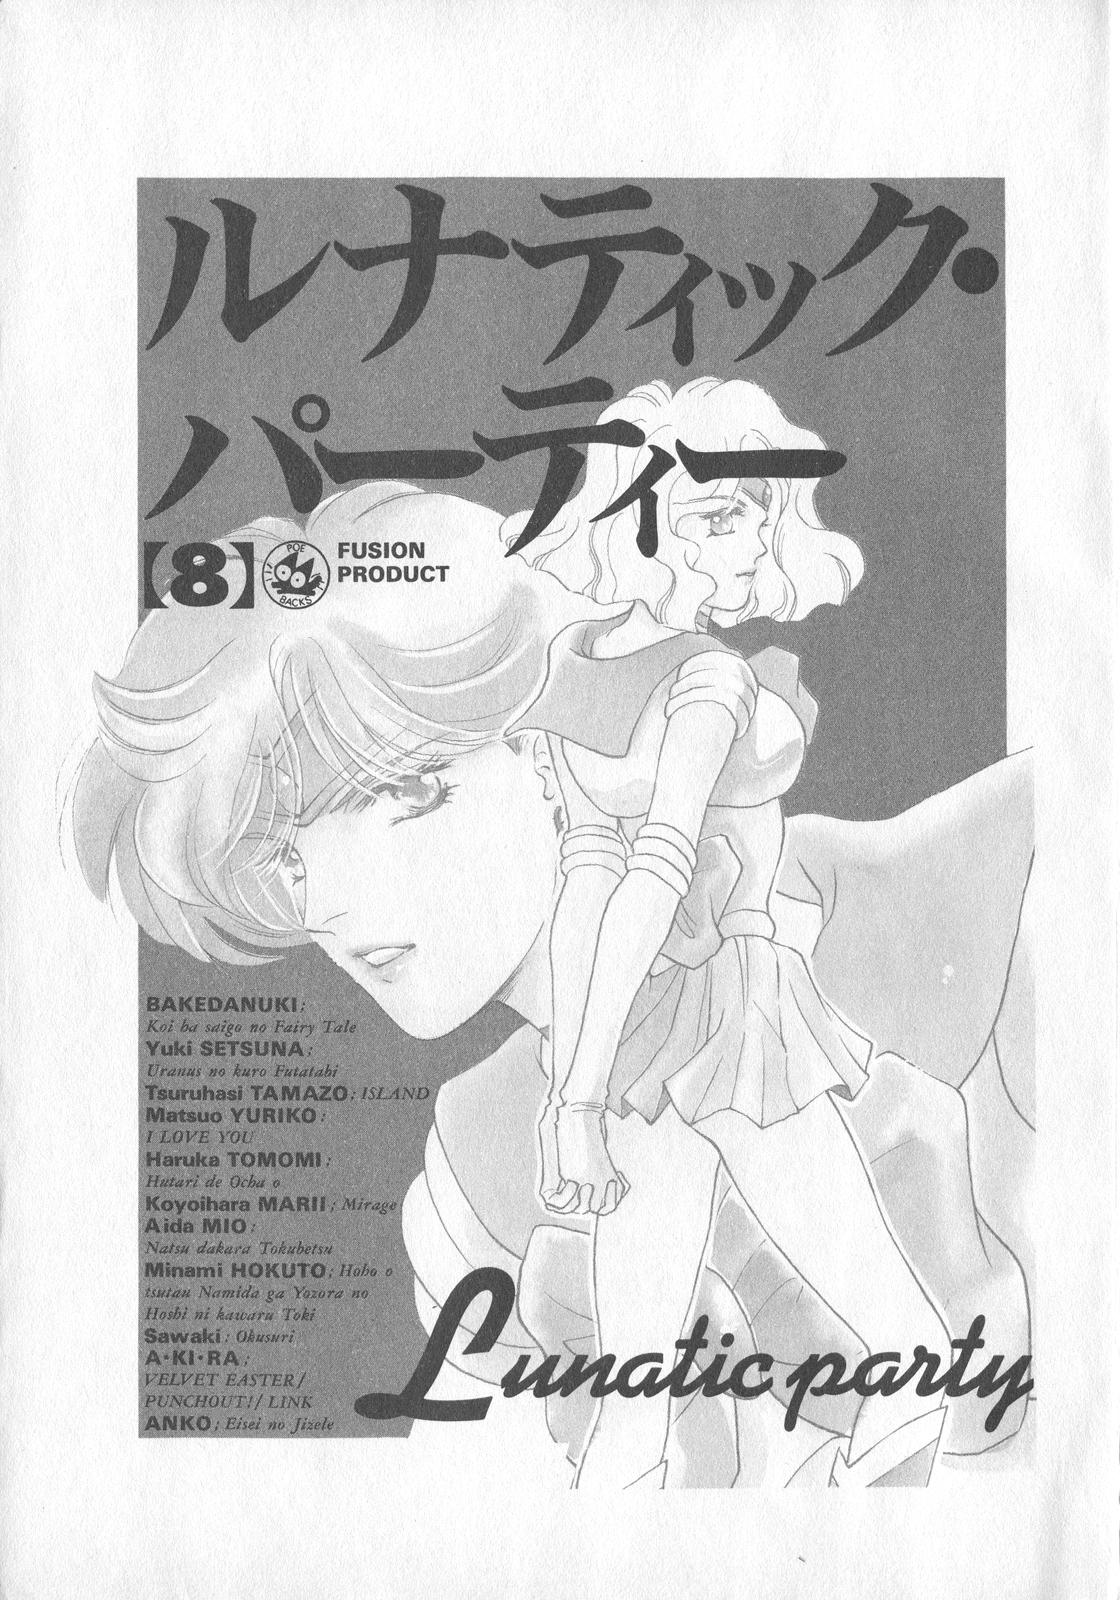 Milf Lunatic Party 8 - Sailor moon Girlsfucking - Page 2